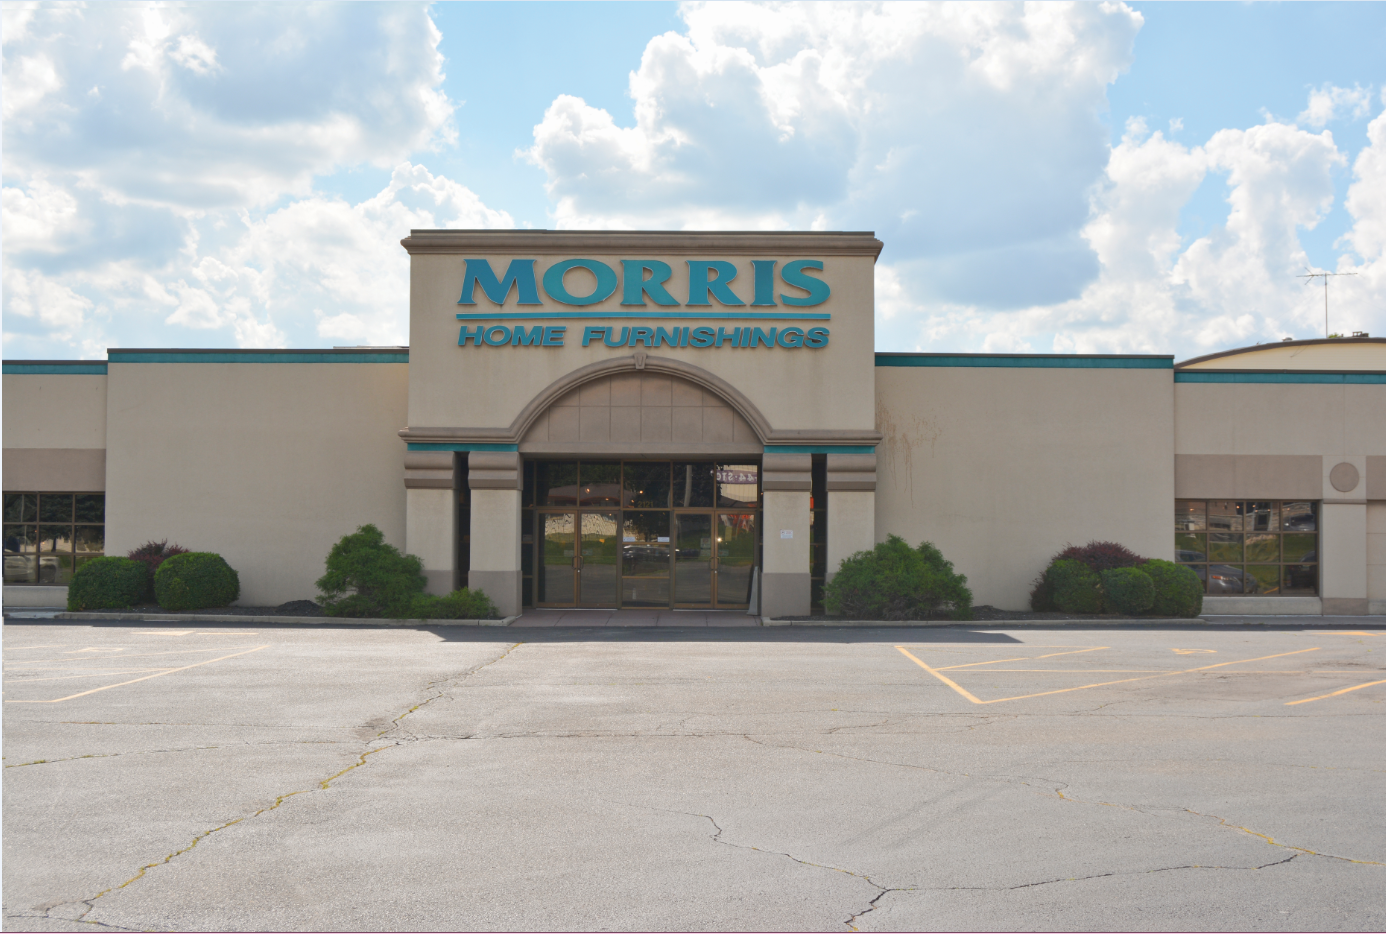 Morris Home Furniture and Mattress Photo